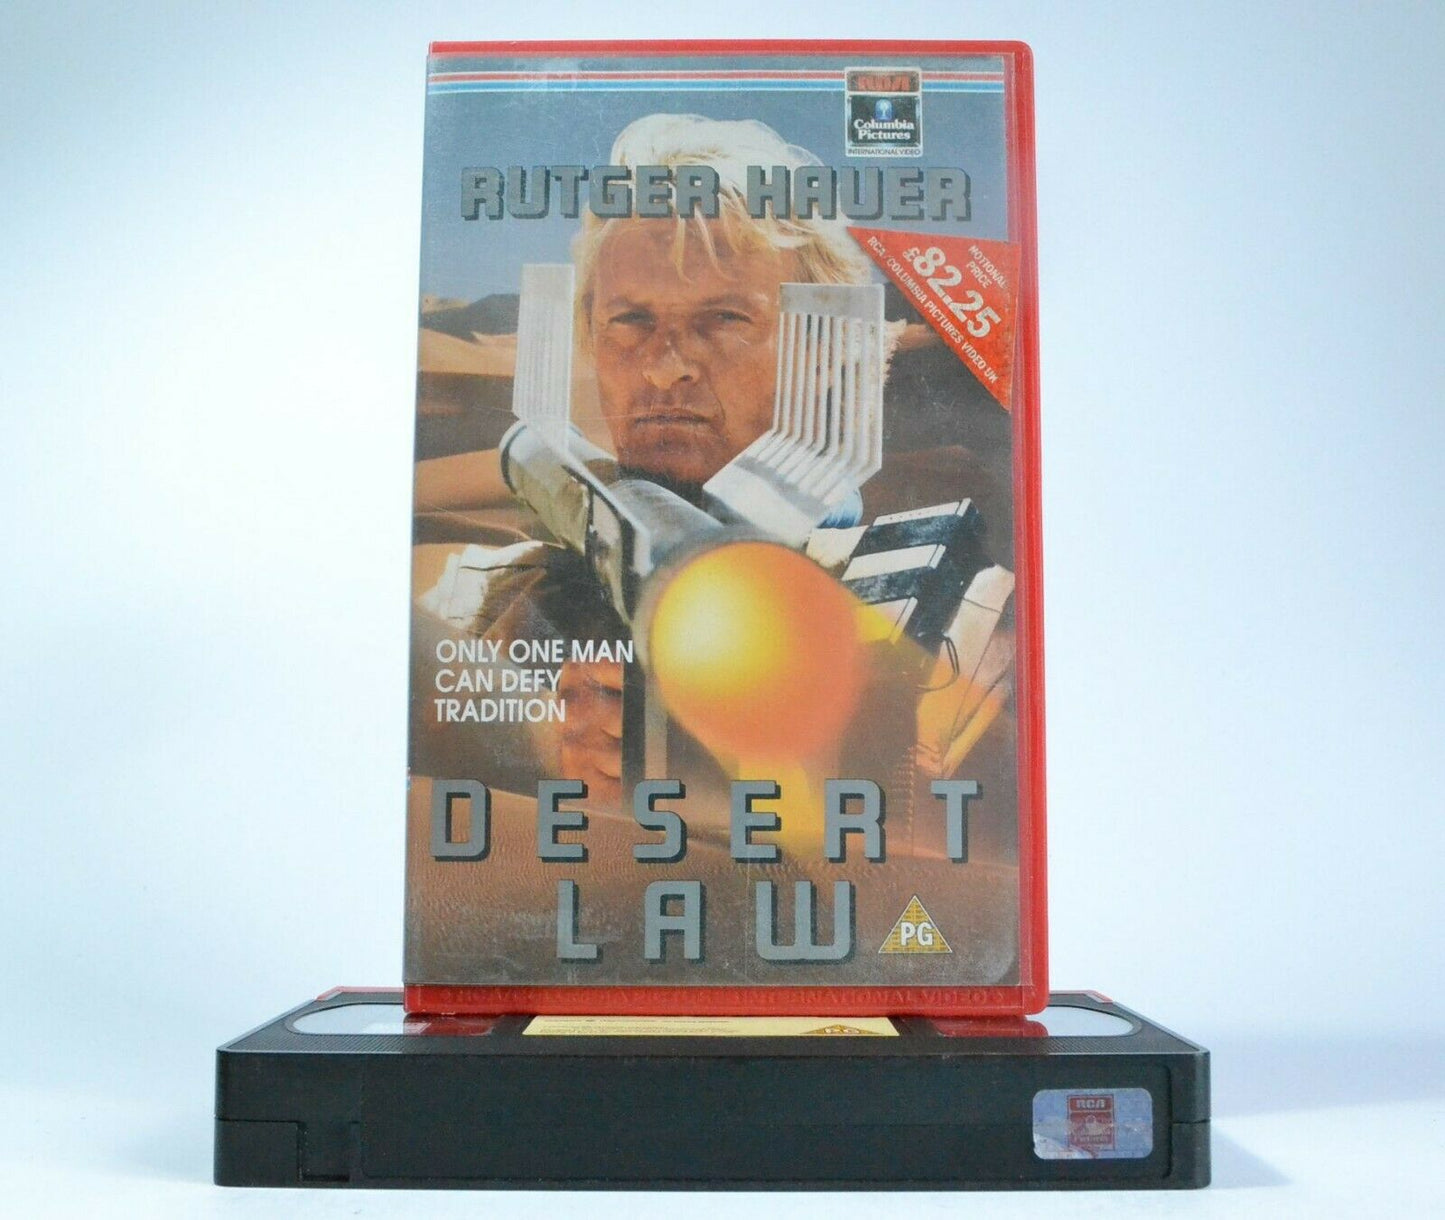 Desert Law (1992): Action/Adventure - Large Box - Rutger Hauer/Omar Sharif - VHS-